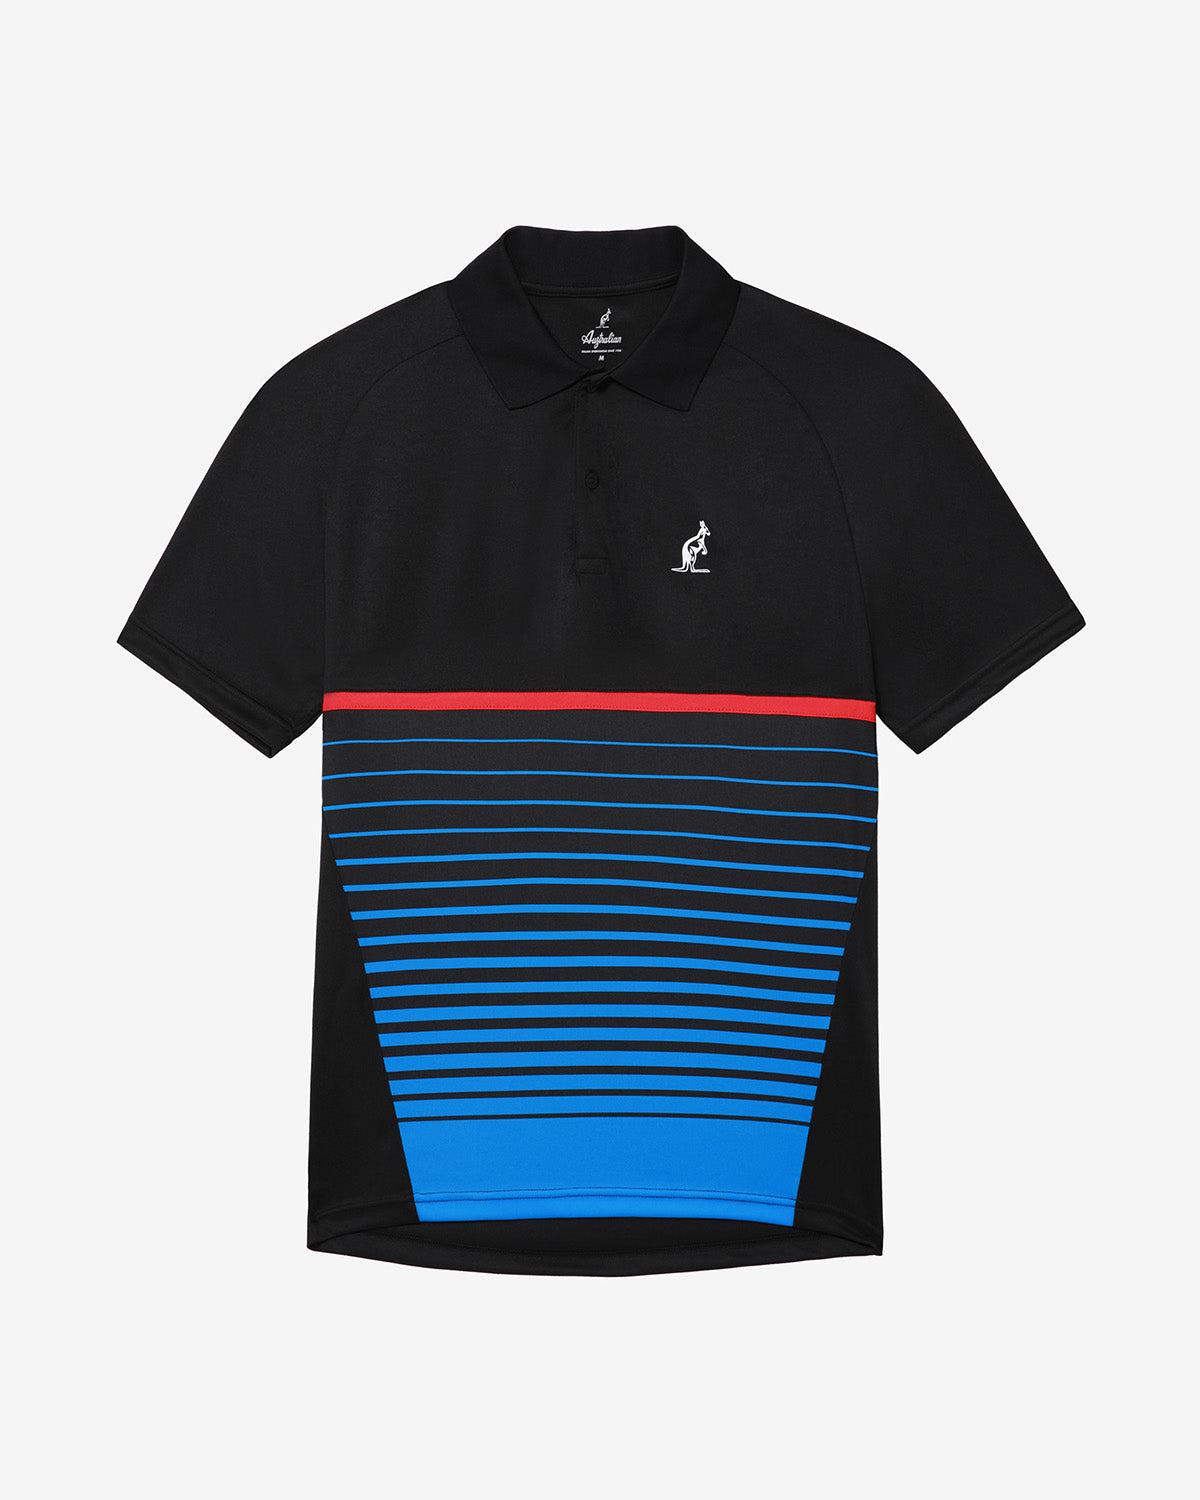 H-Lines Polo Shirt: Australian Tennis